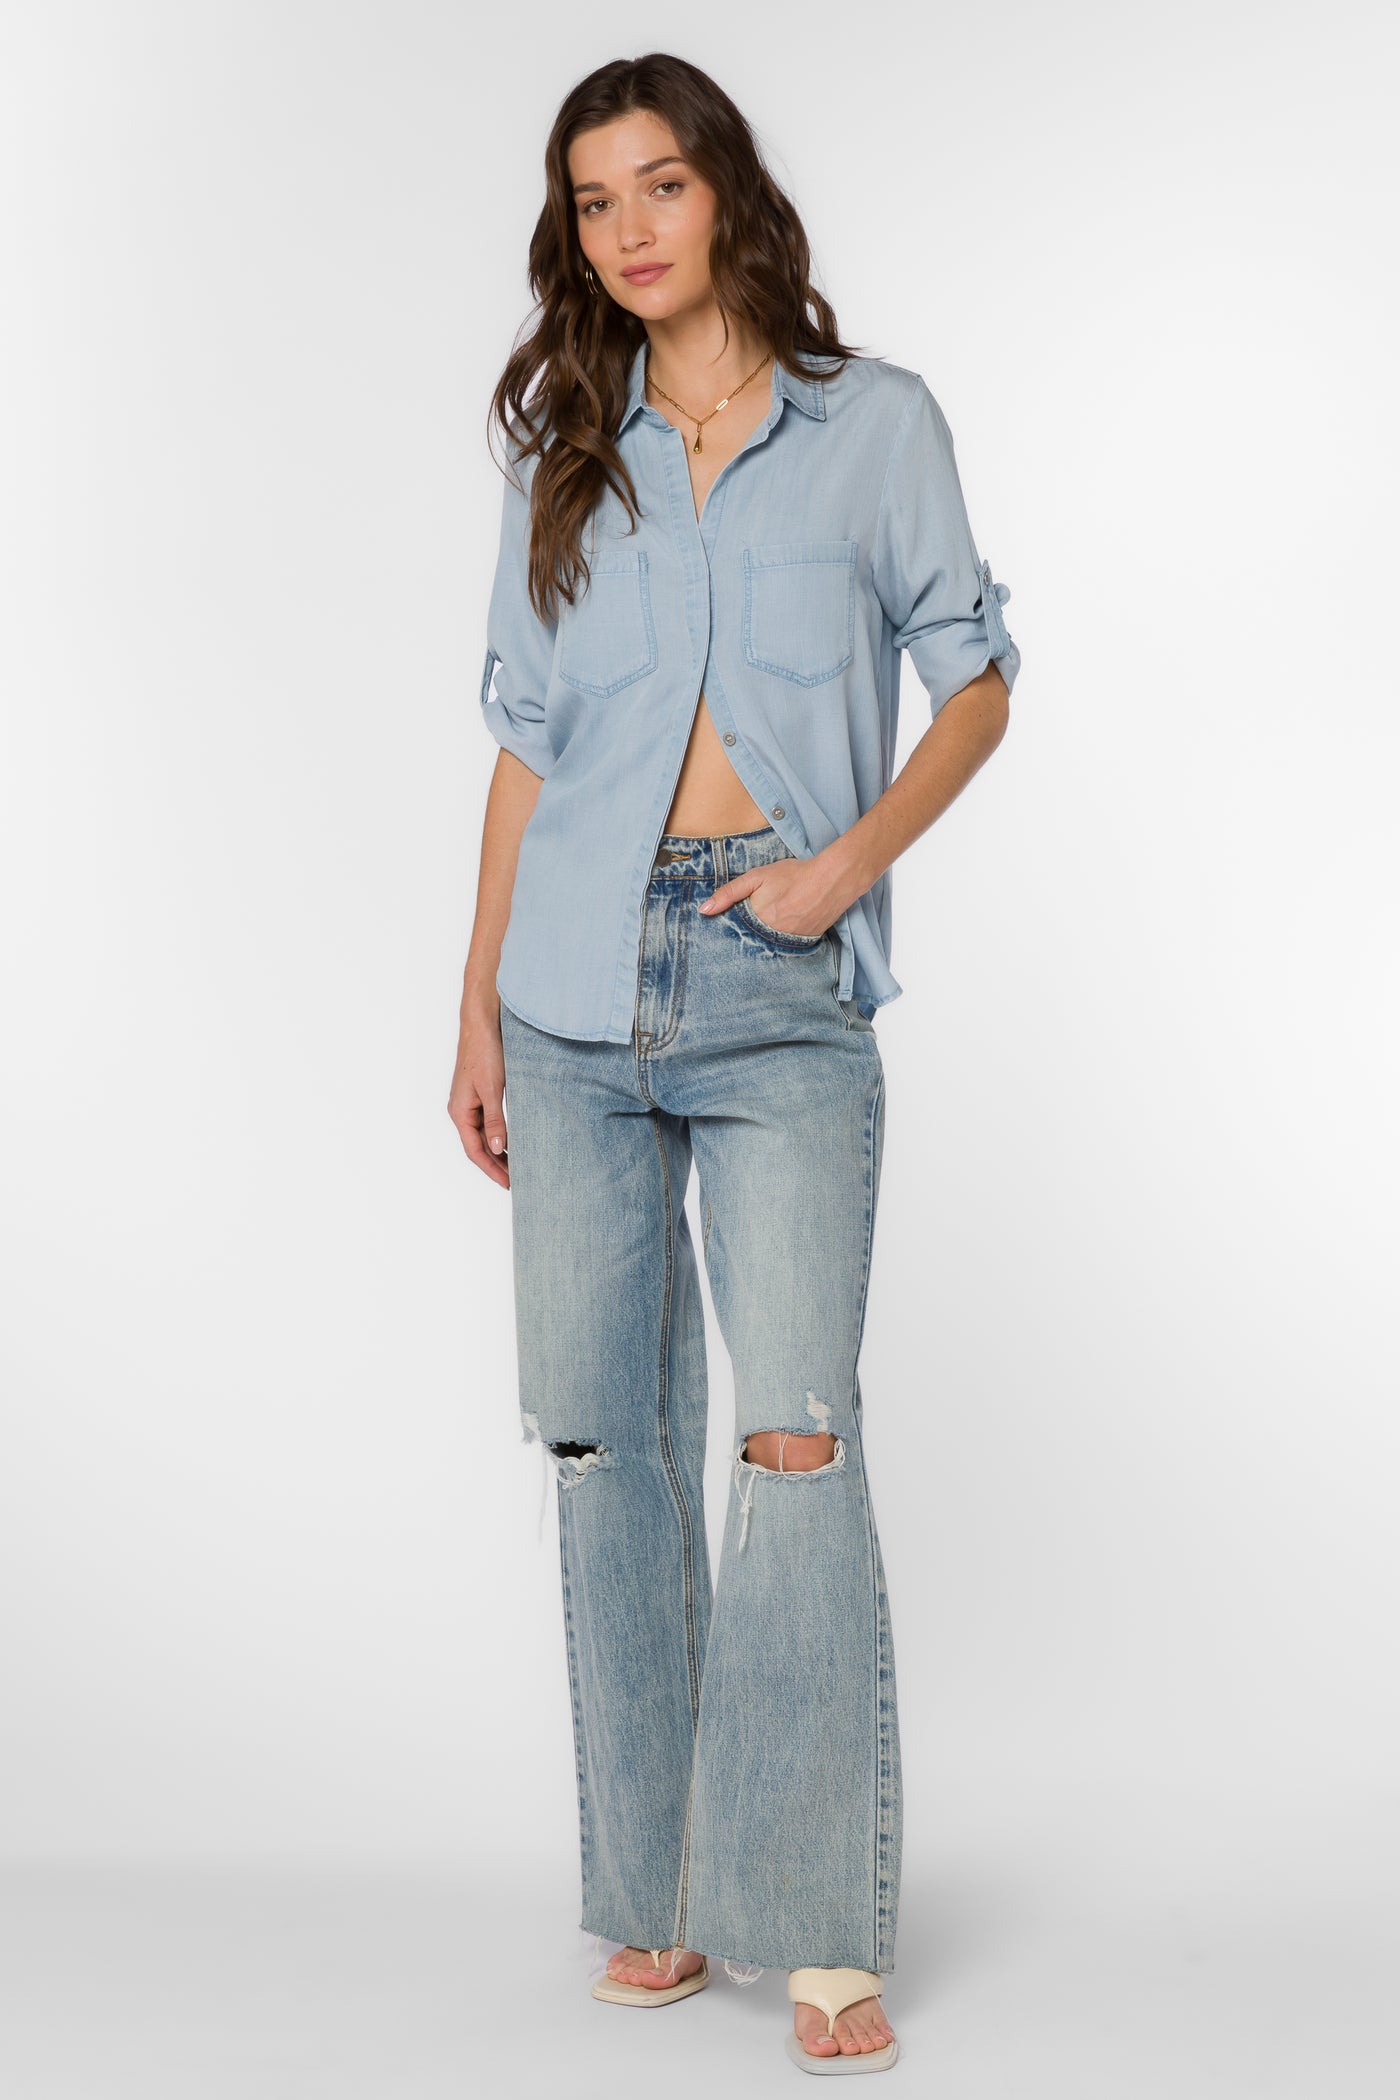 Riley Catalina Blue Shirt - Tops - Velvet Heart Clothing